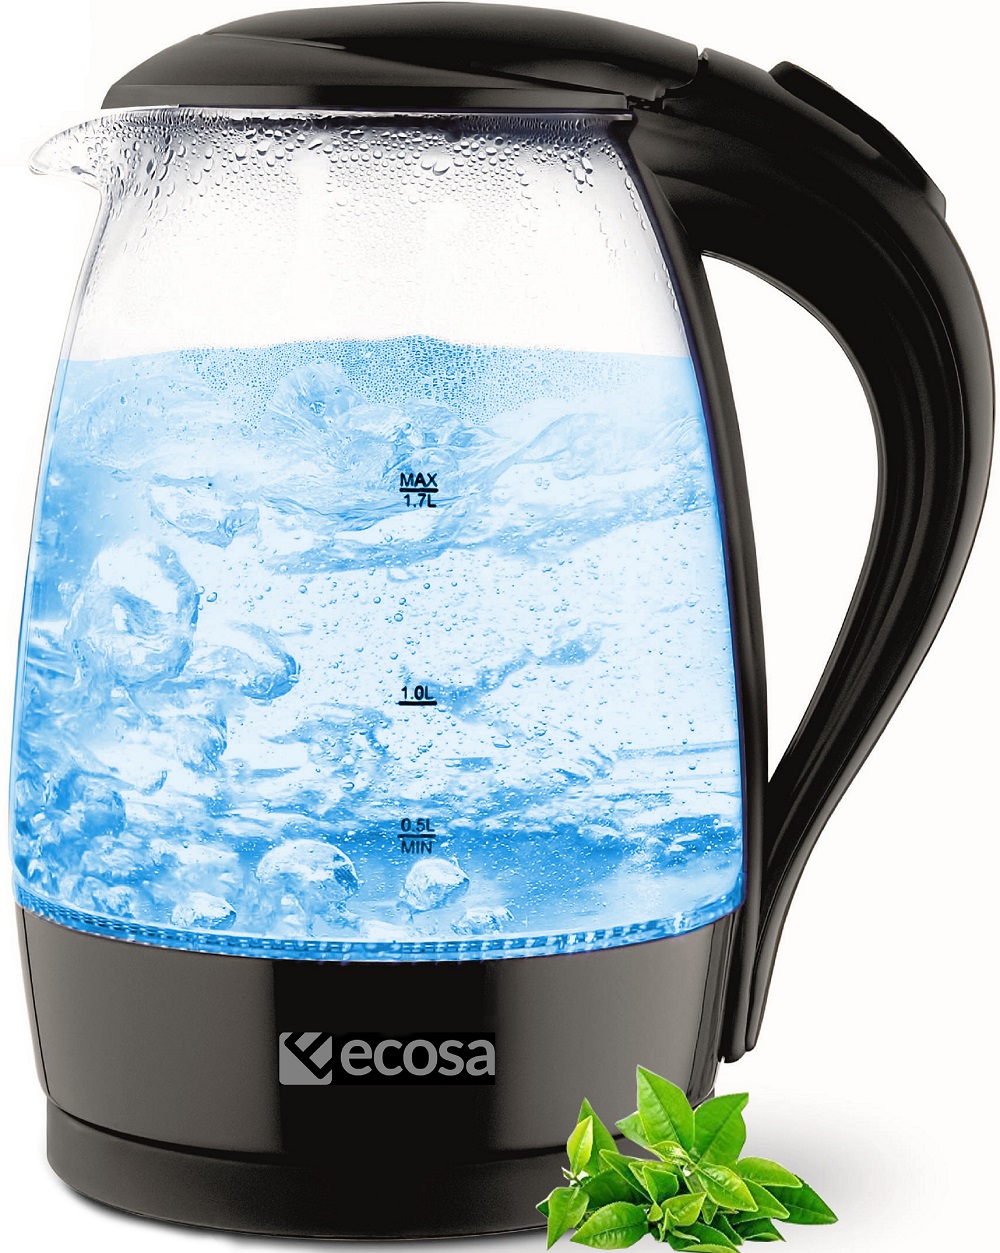 Ecosa EO-680 Wasserkocher